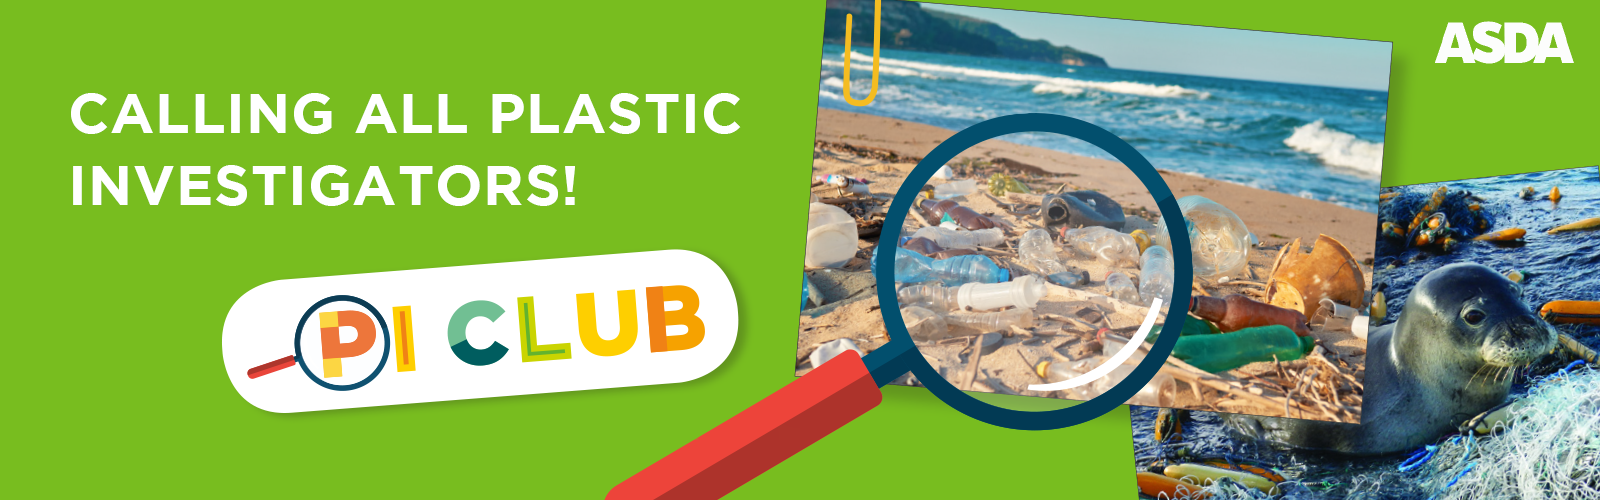 Local Schools Have Chance to win £20,000 With Asda’s Plastic Investigators Club